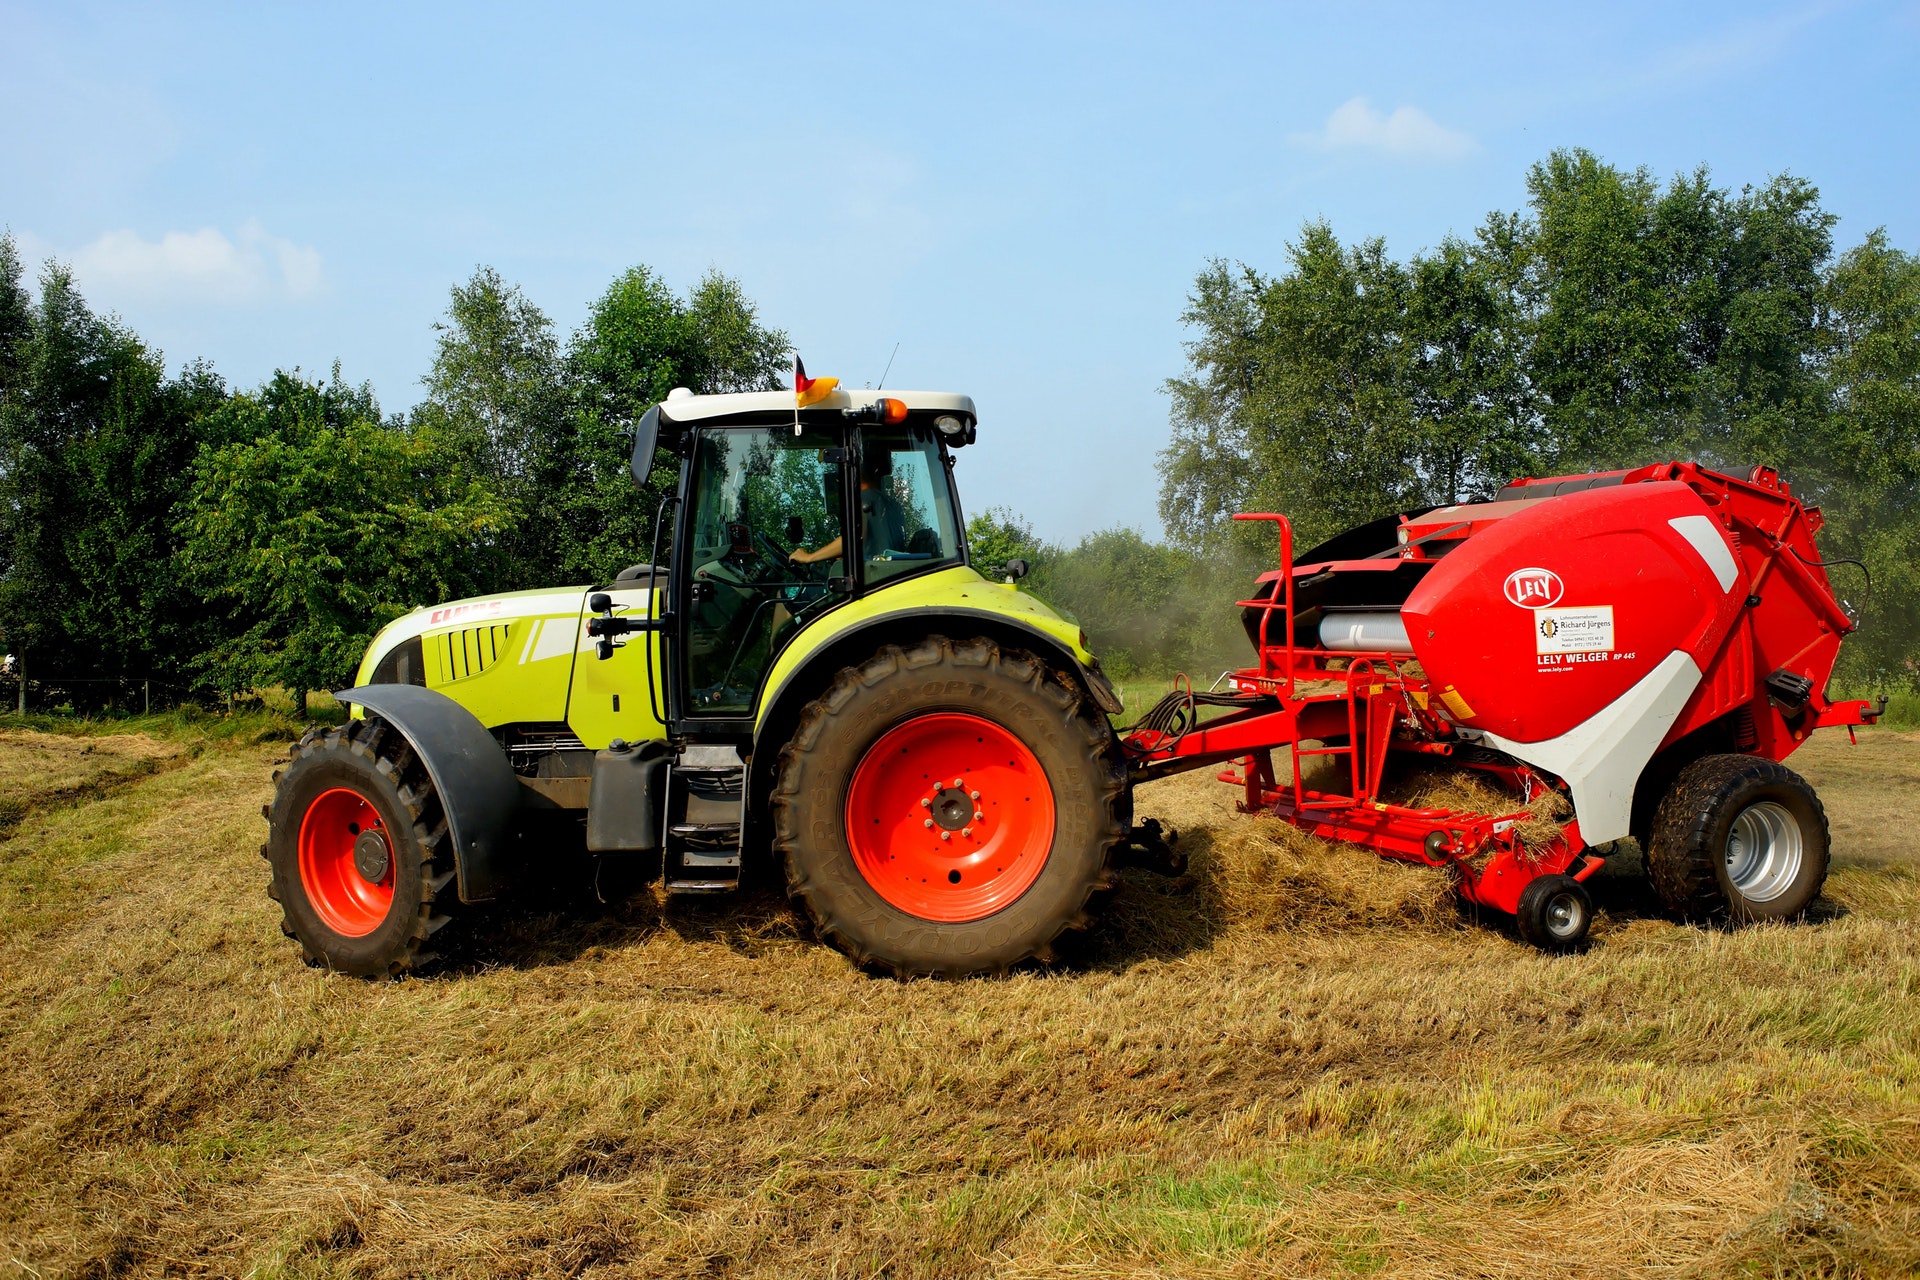 tractor-round-baler-custom-work-hay-162371